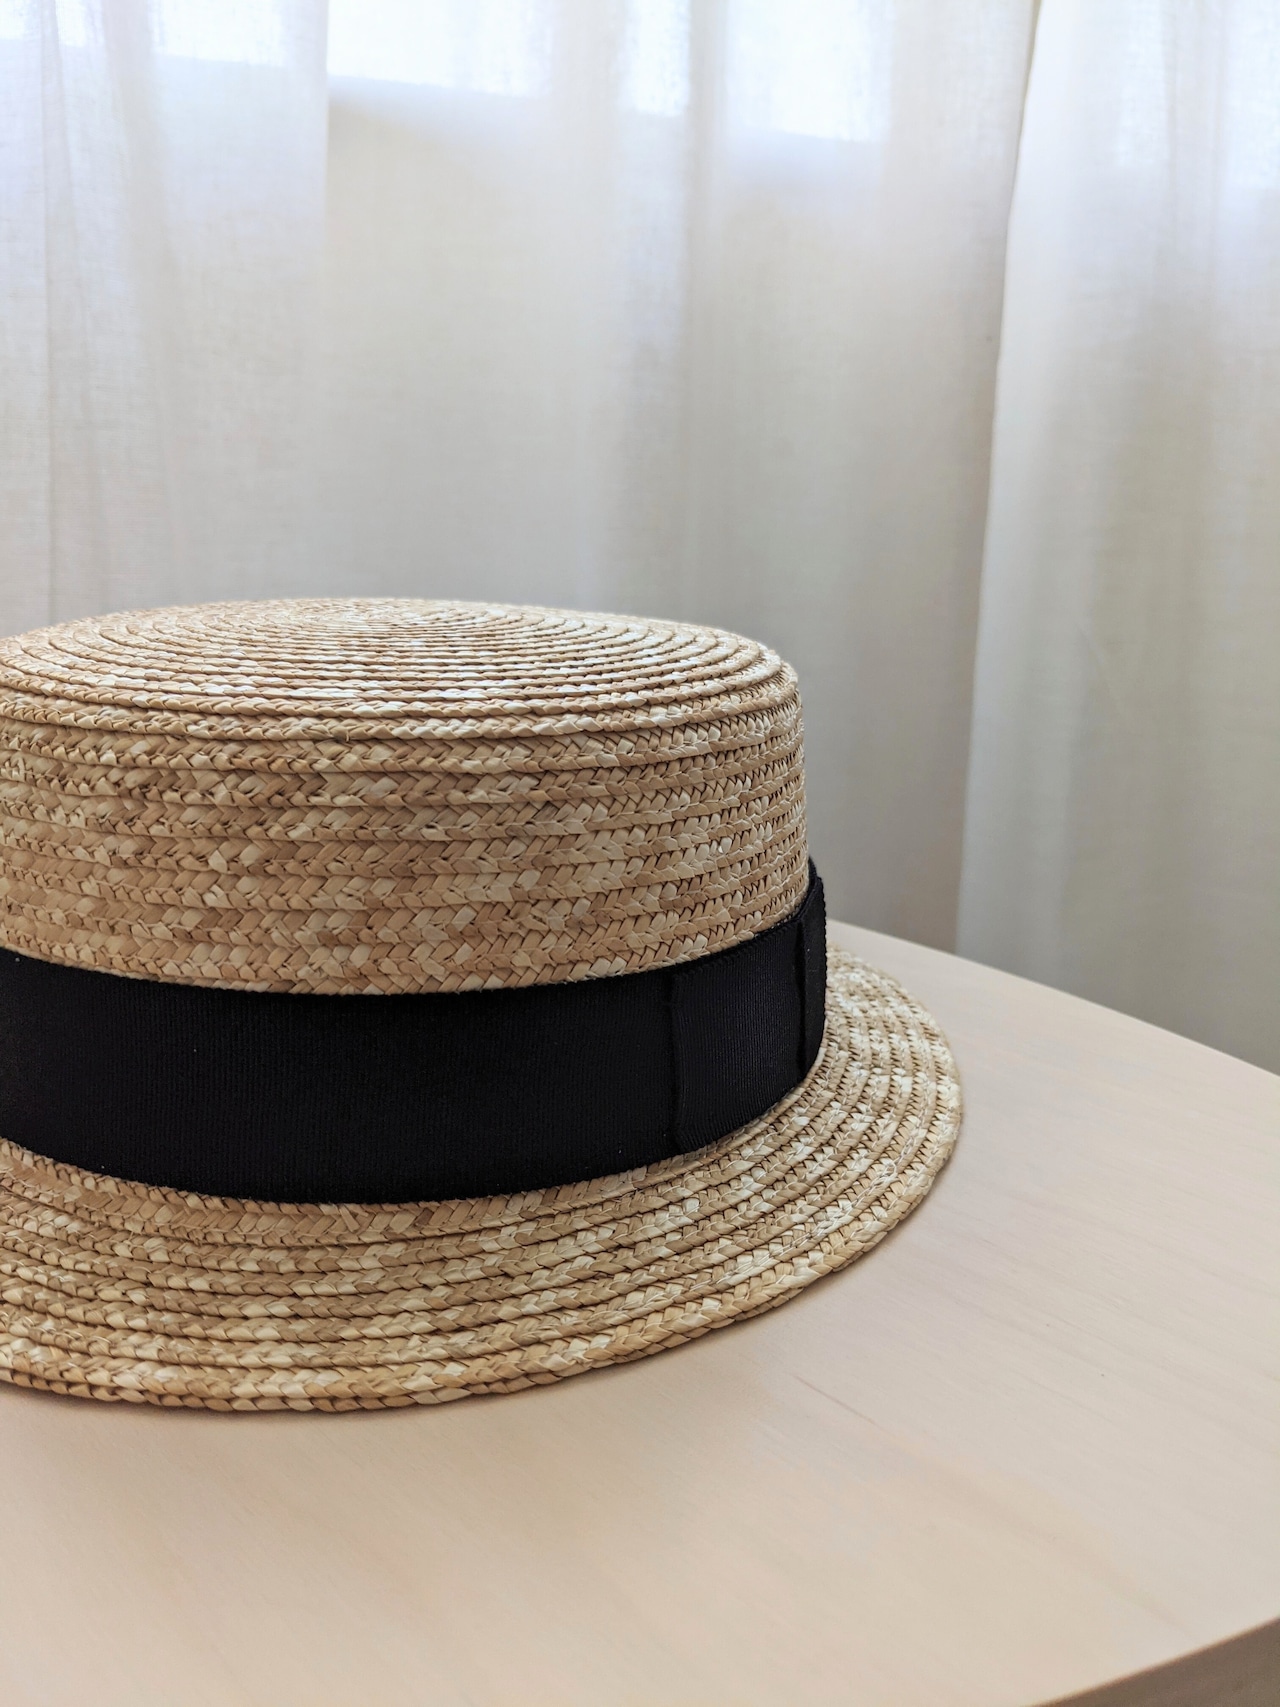 Restock - Maran Summer Hat -  Kids 54cm